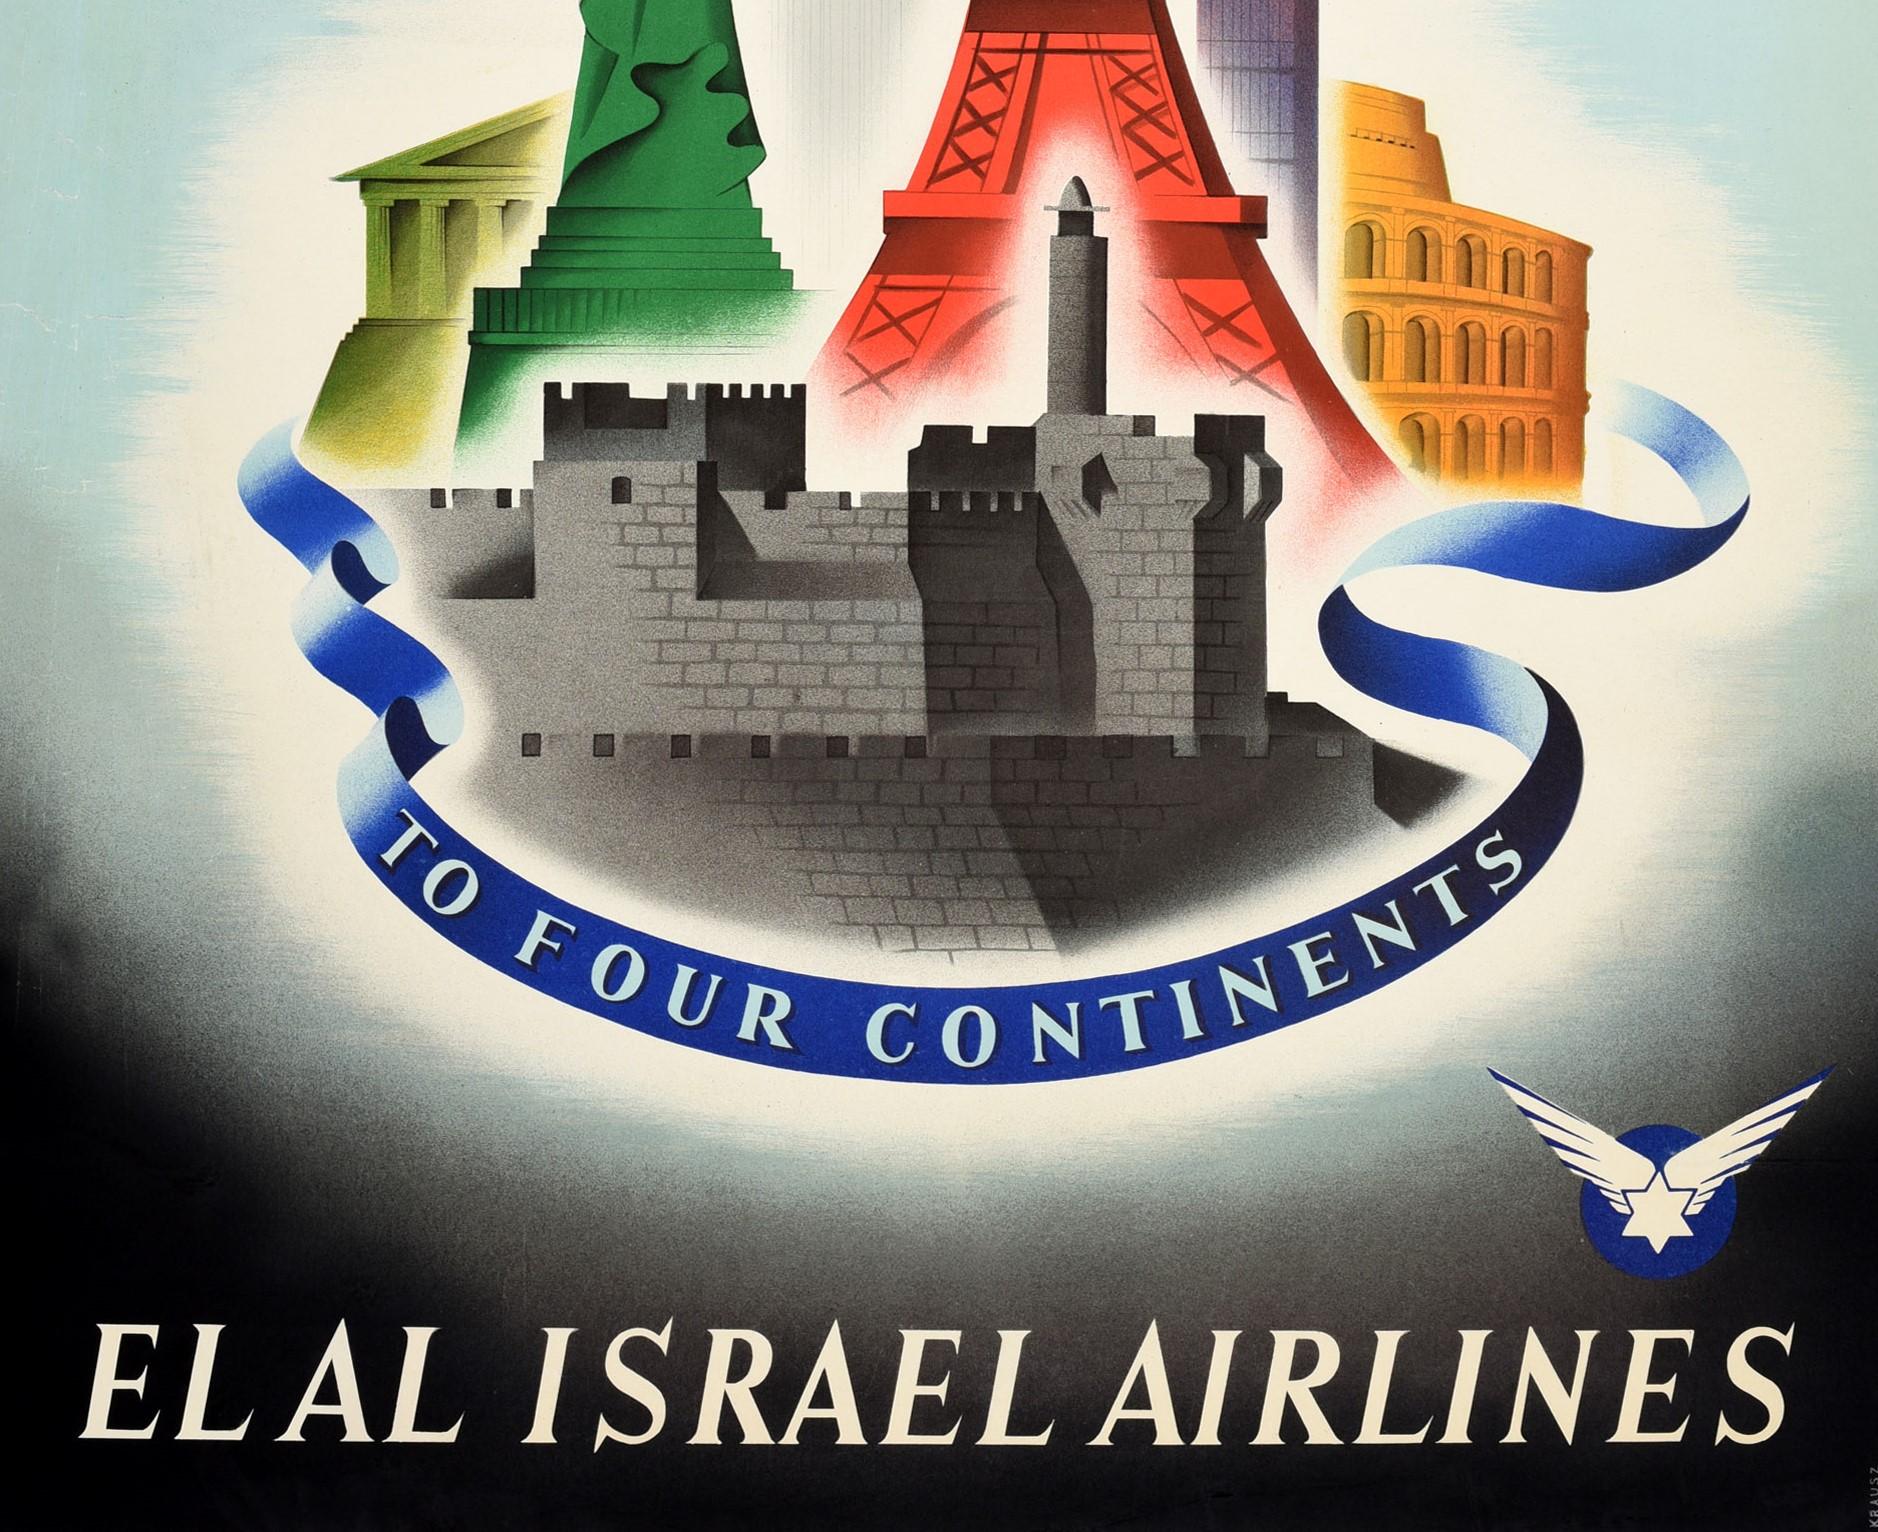 Israeli Original Vintage Poster Fly Constellation Four Continents El Al Israel Airlines